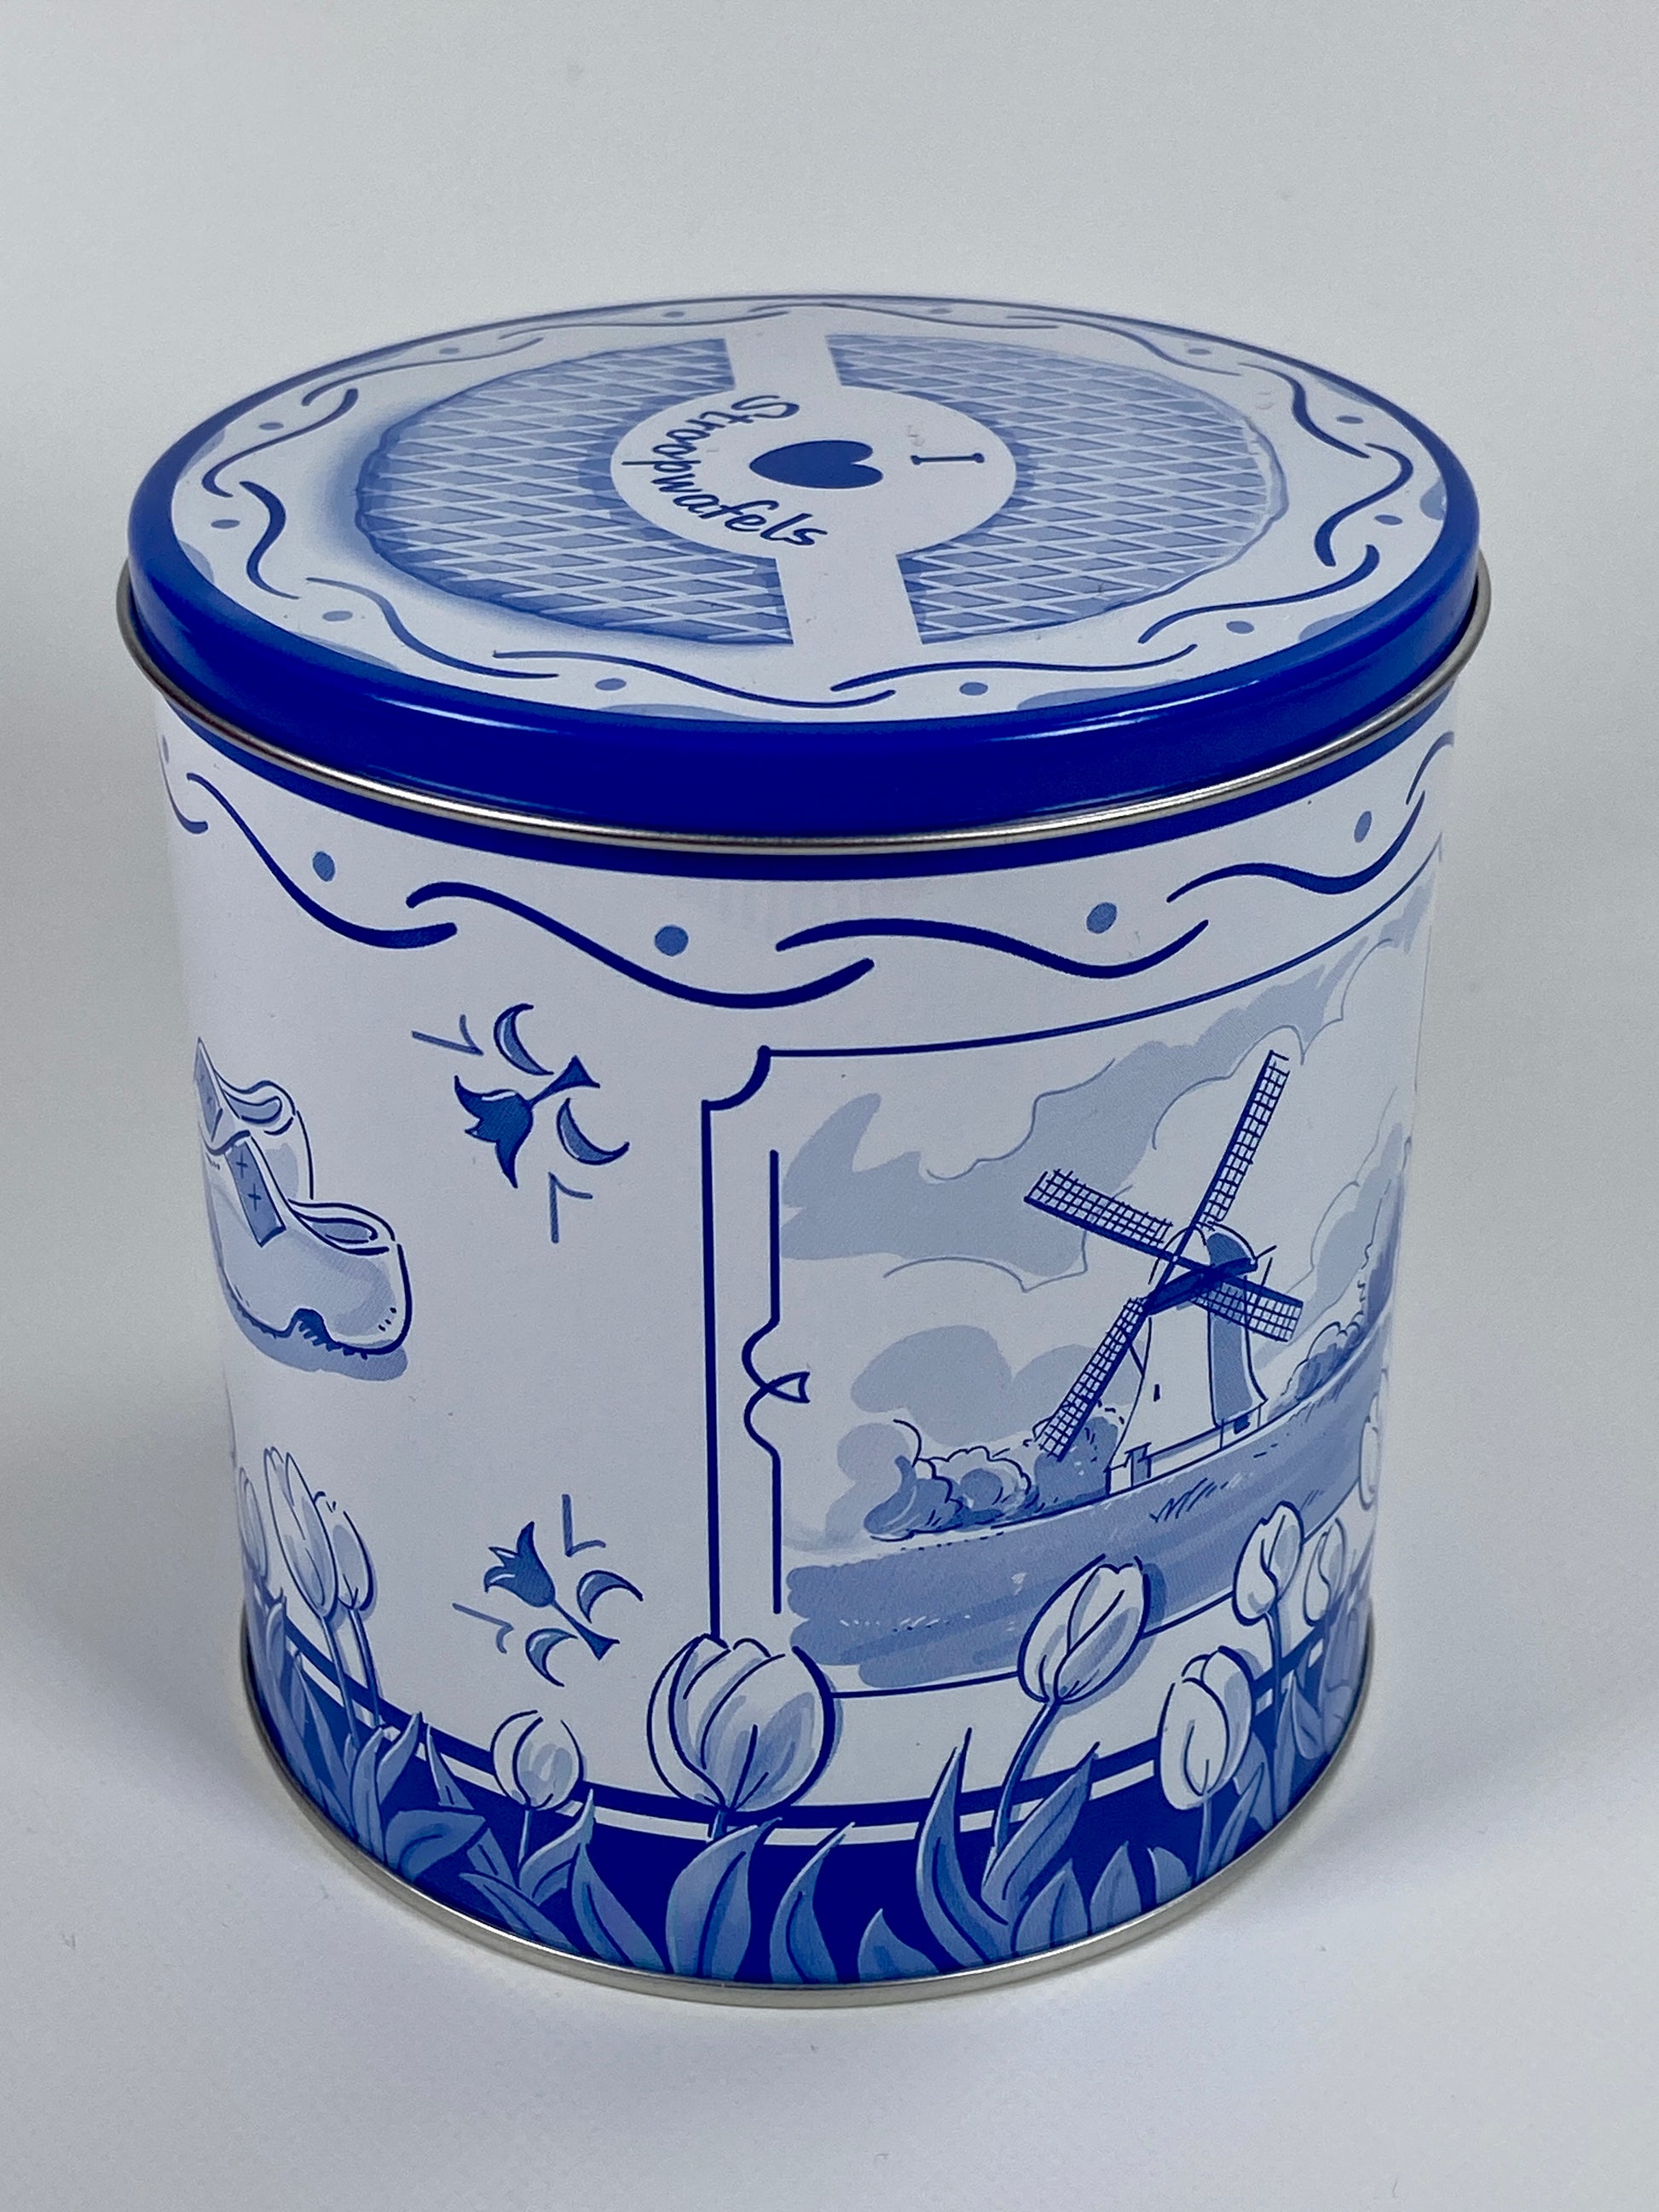 Tin with Delft blue pattern and text 'I love stroopwafels' - Big Bite Dutch Treats